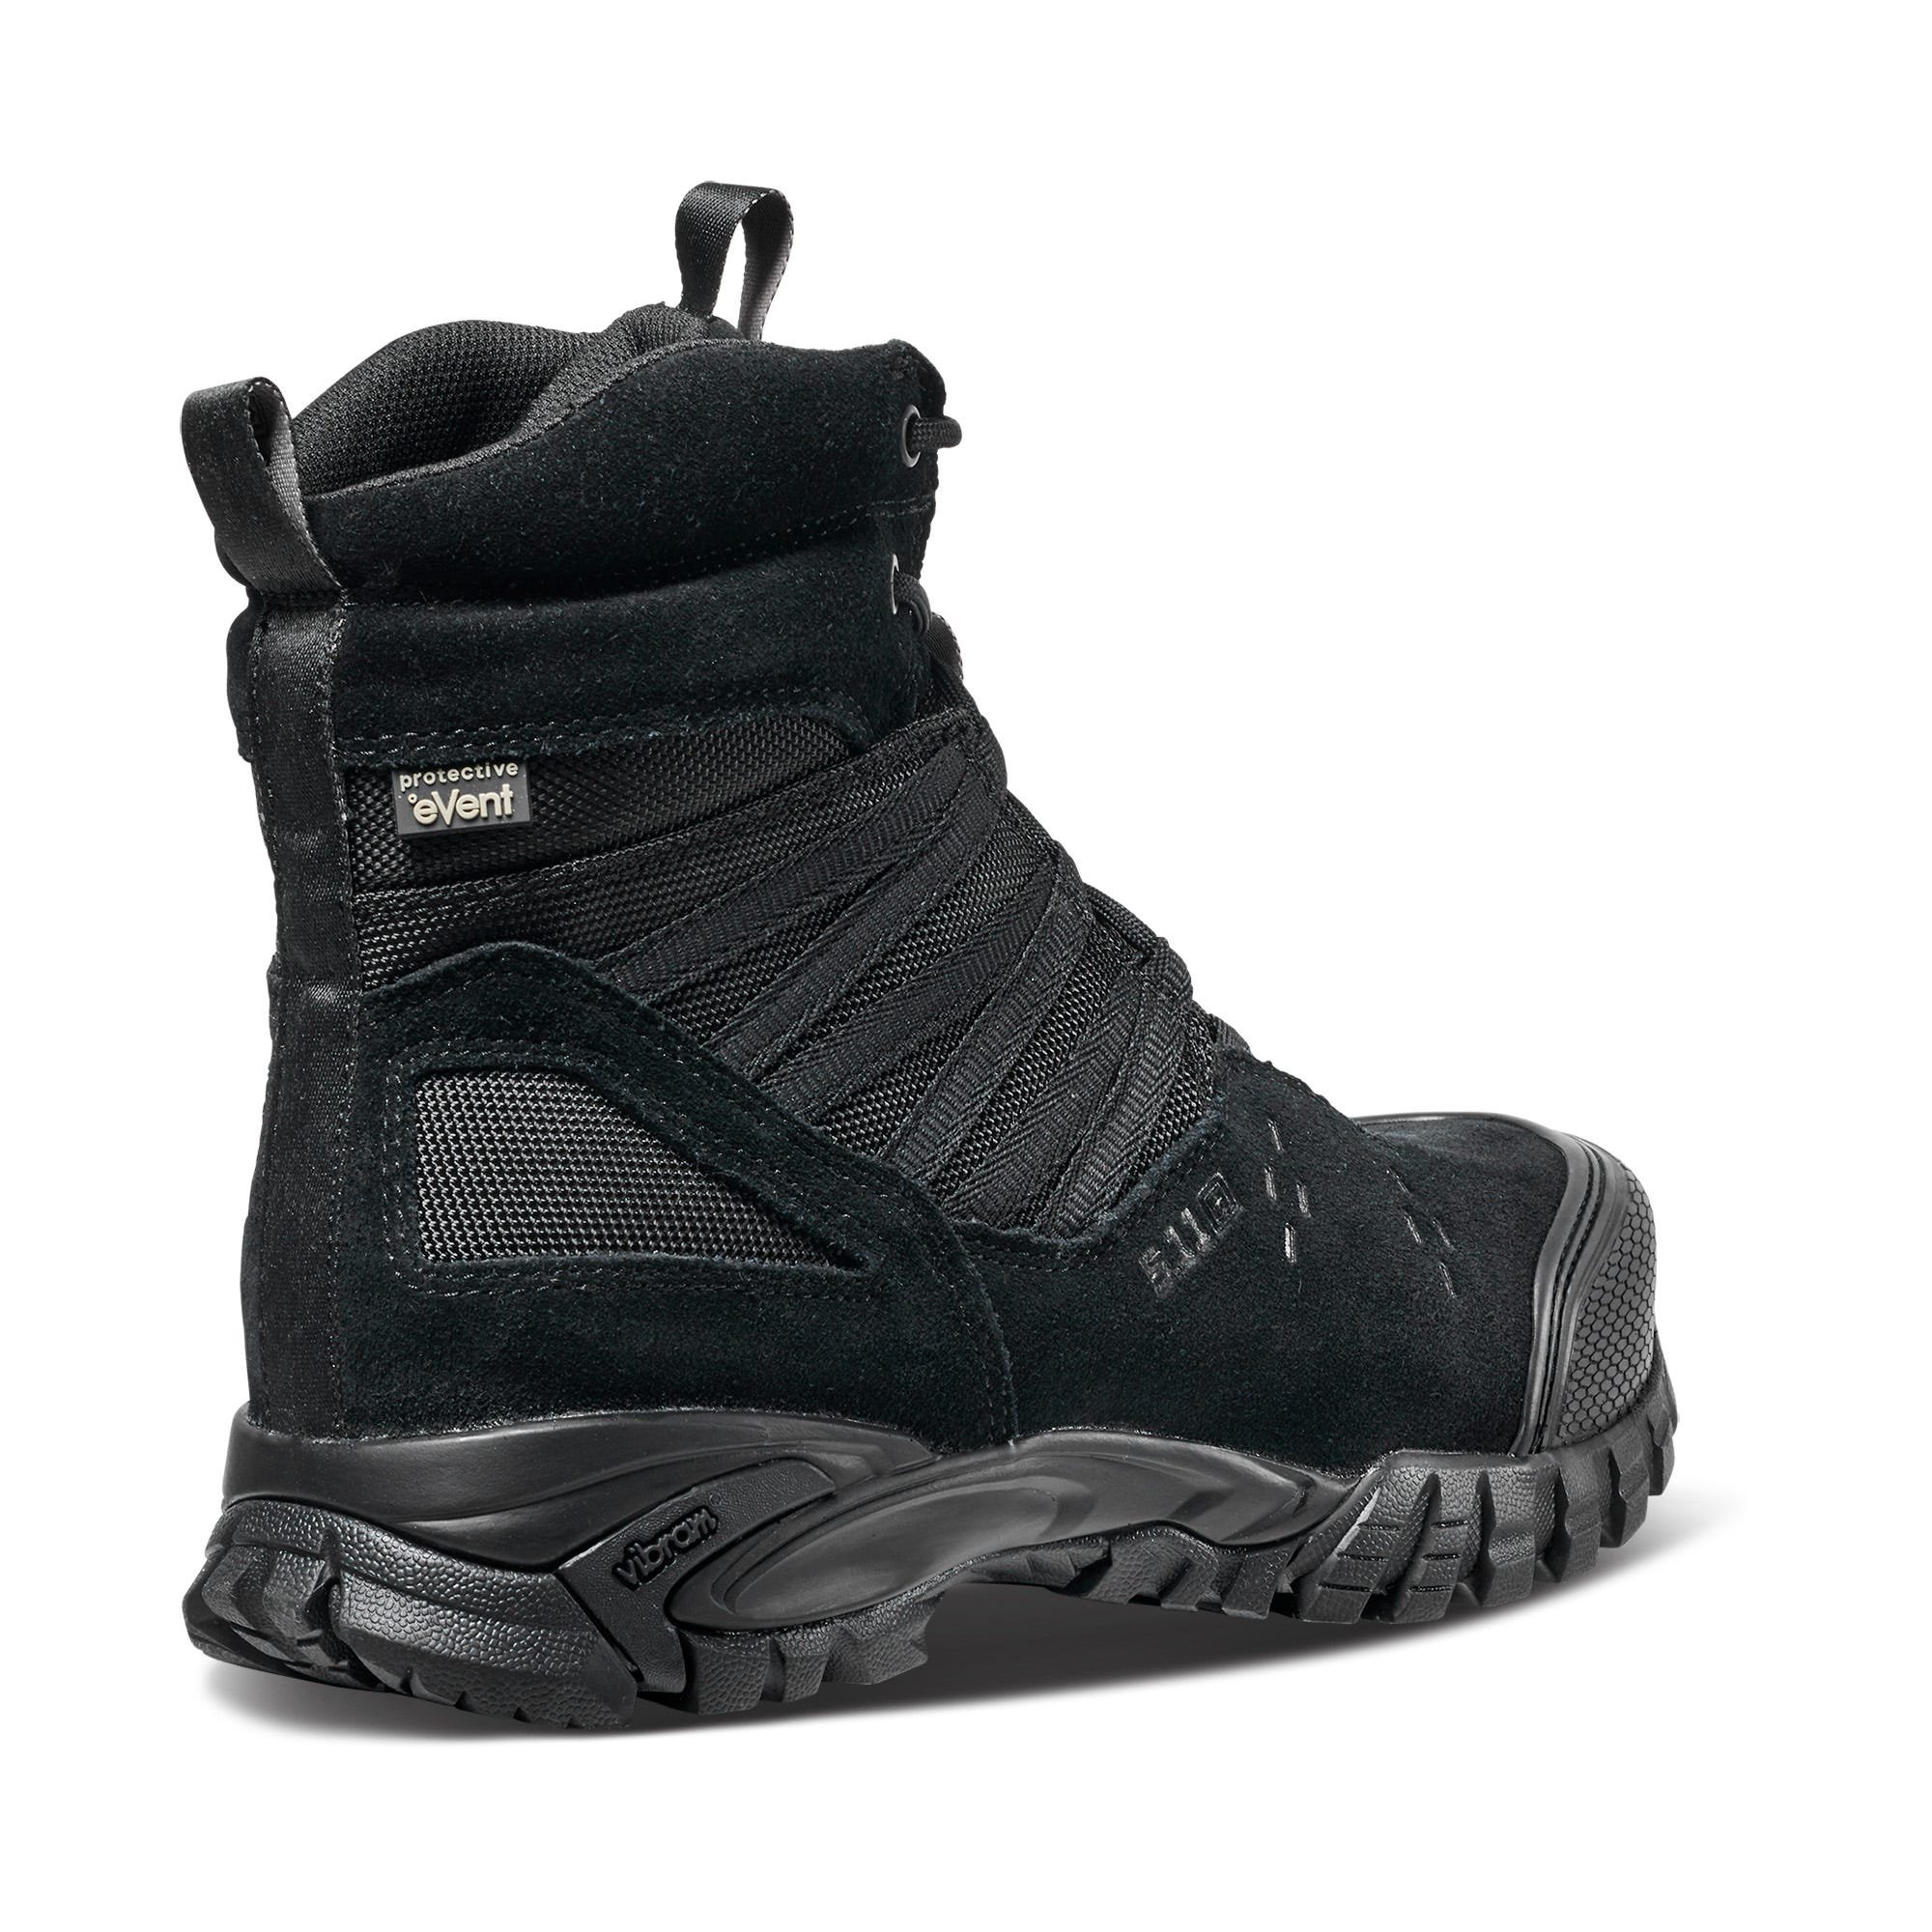 5.11 Work Gear Men's Union Waterproof 6-Inch Work Boots, Shock Absorbing Insole, Black, 7 Wide, Style 12390 - image 2 of 8